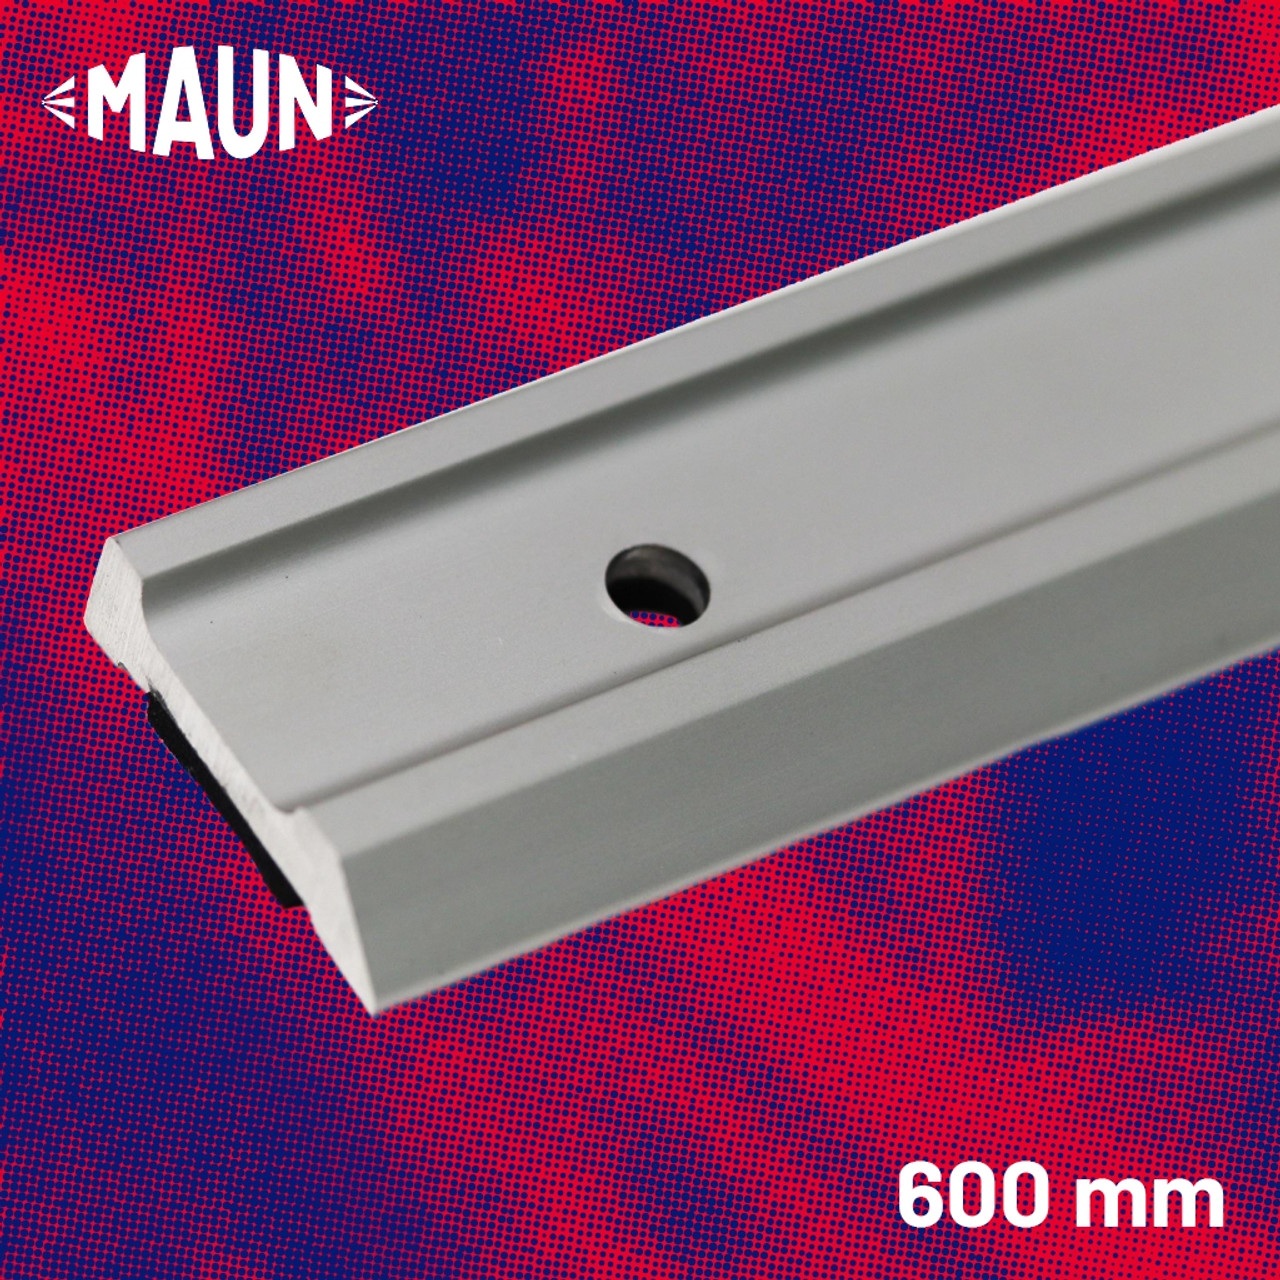 Aluminium Safety Straight Edge 600 mm